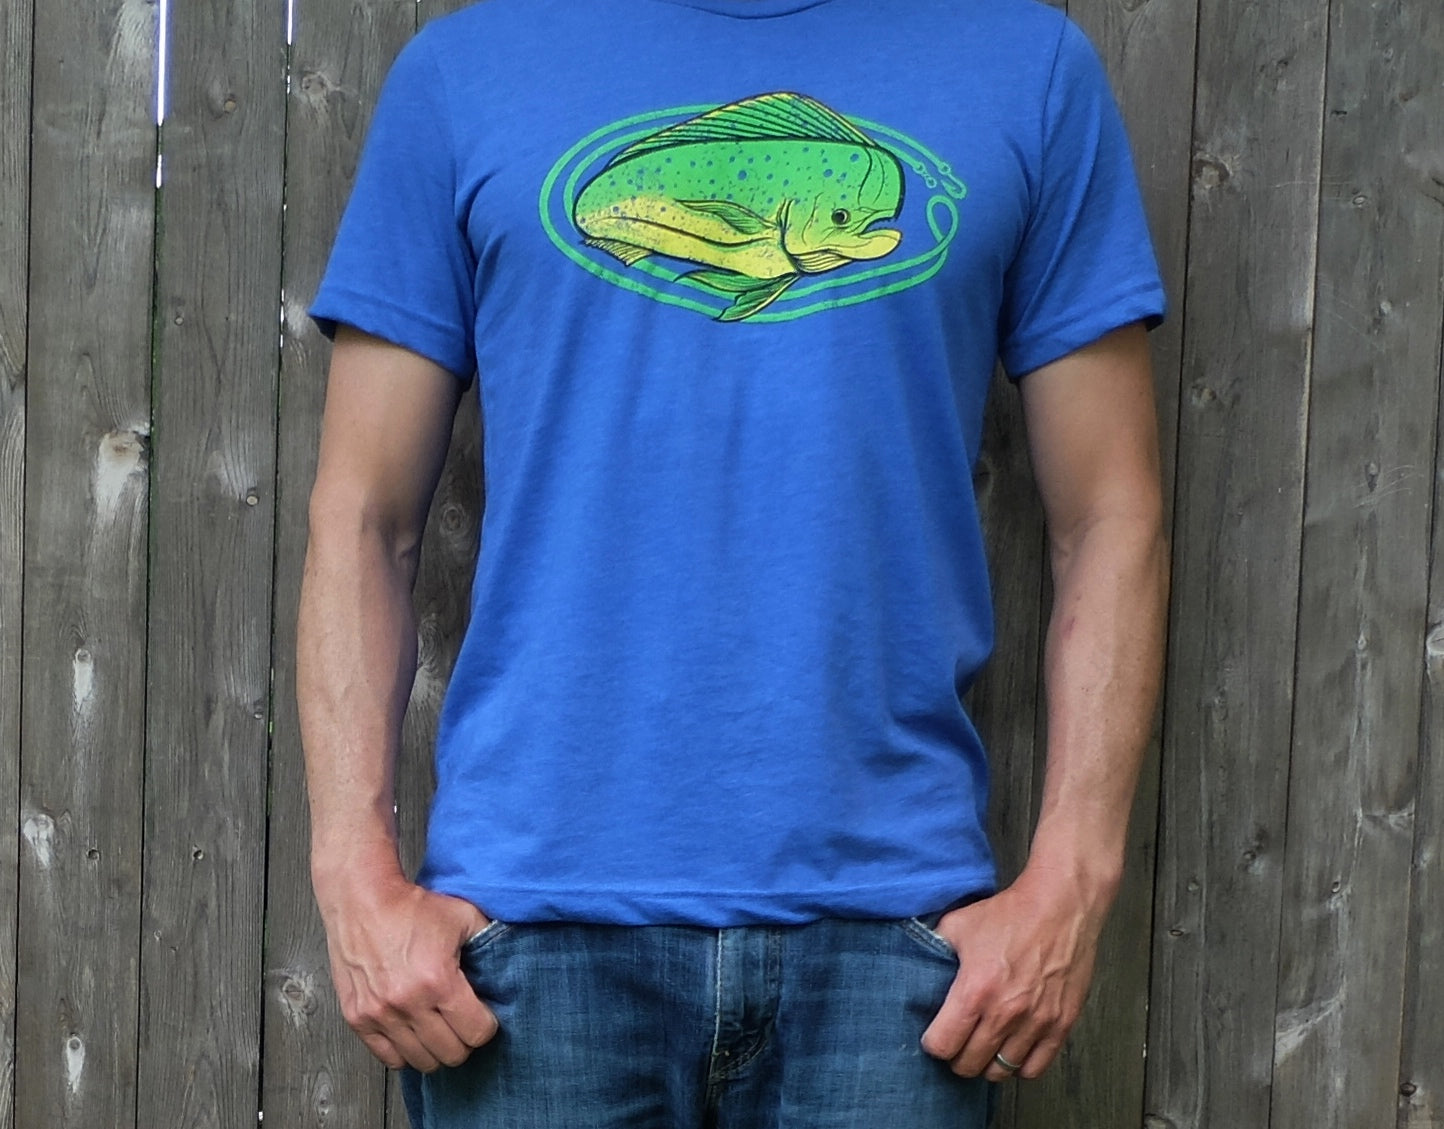 man wearing heather royal blue t-shirt with bright lime and yellow oval-shaped mahi mahi fishing graphic